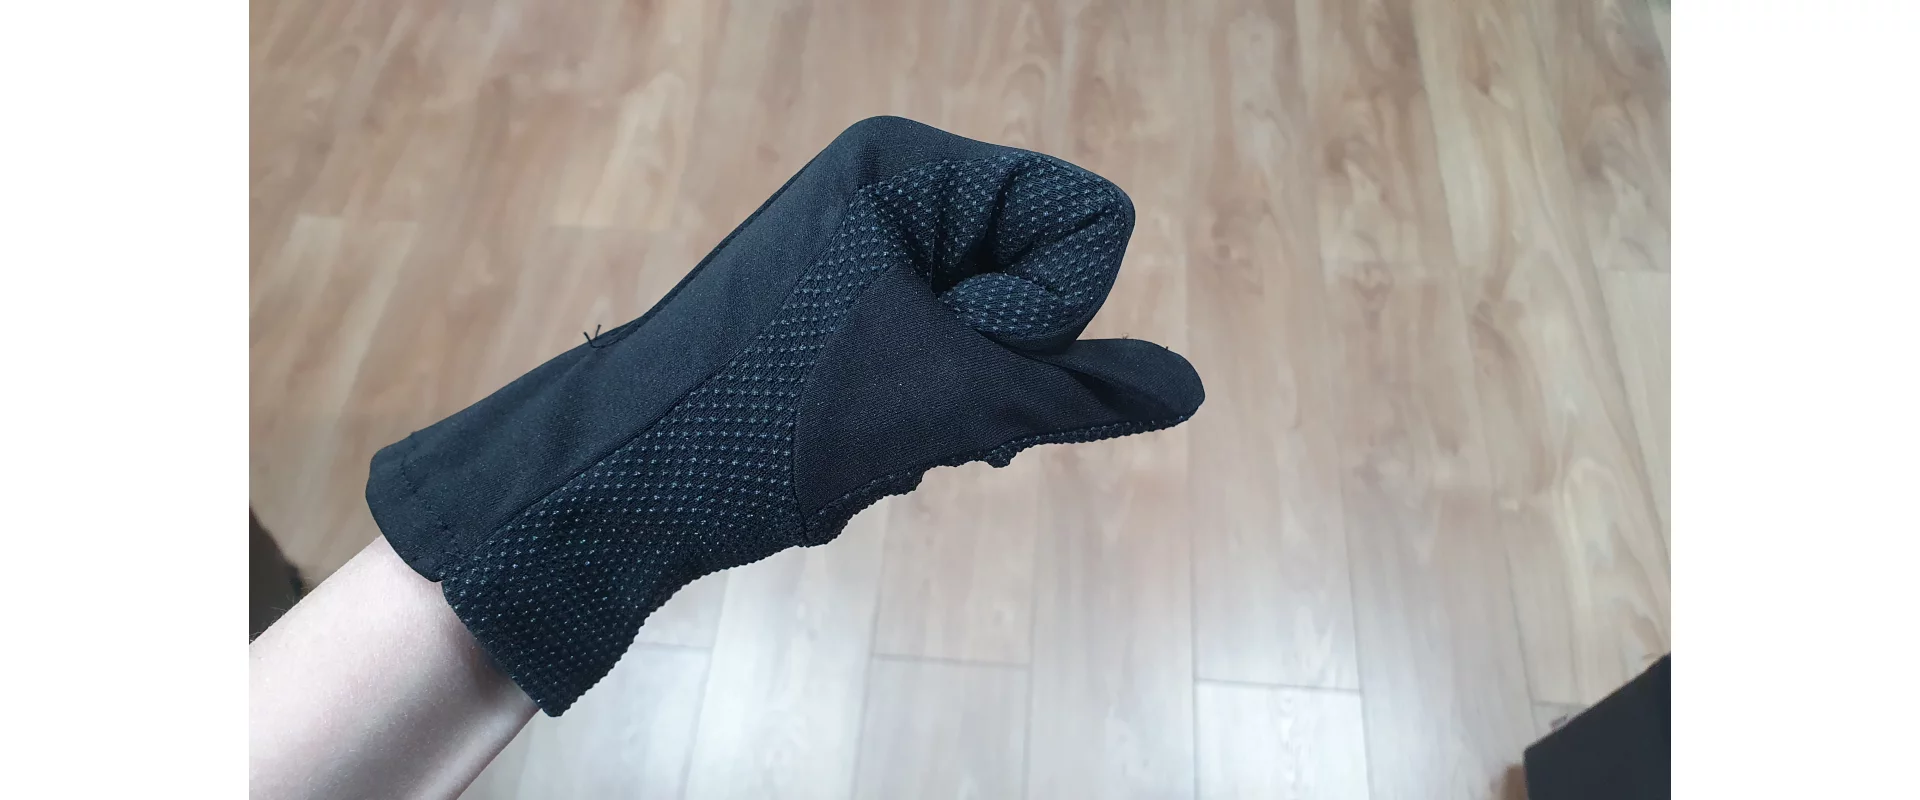 Перчатки для надевания гидрокостюма фото 3